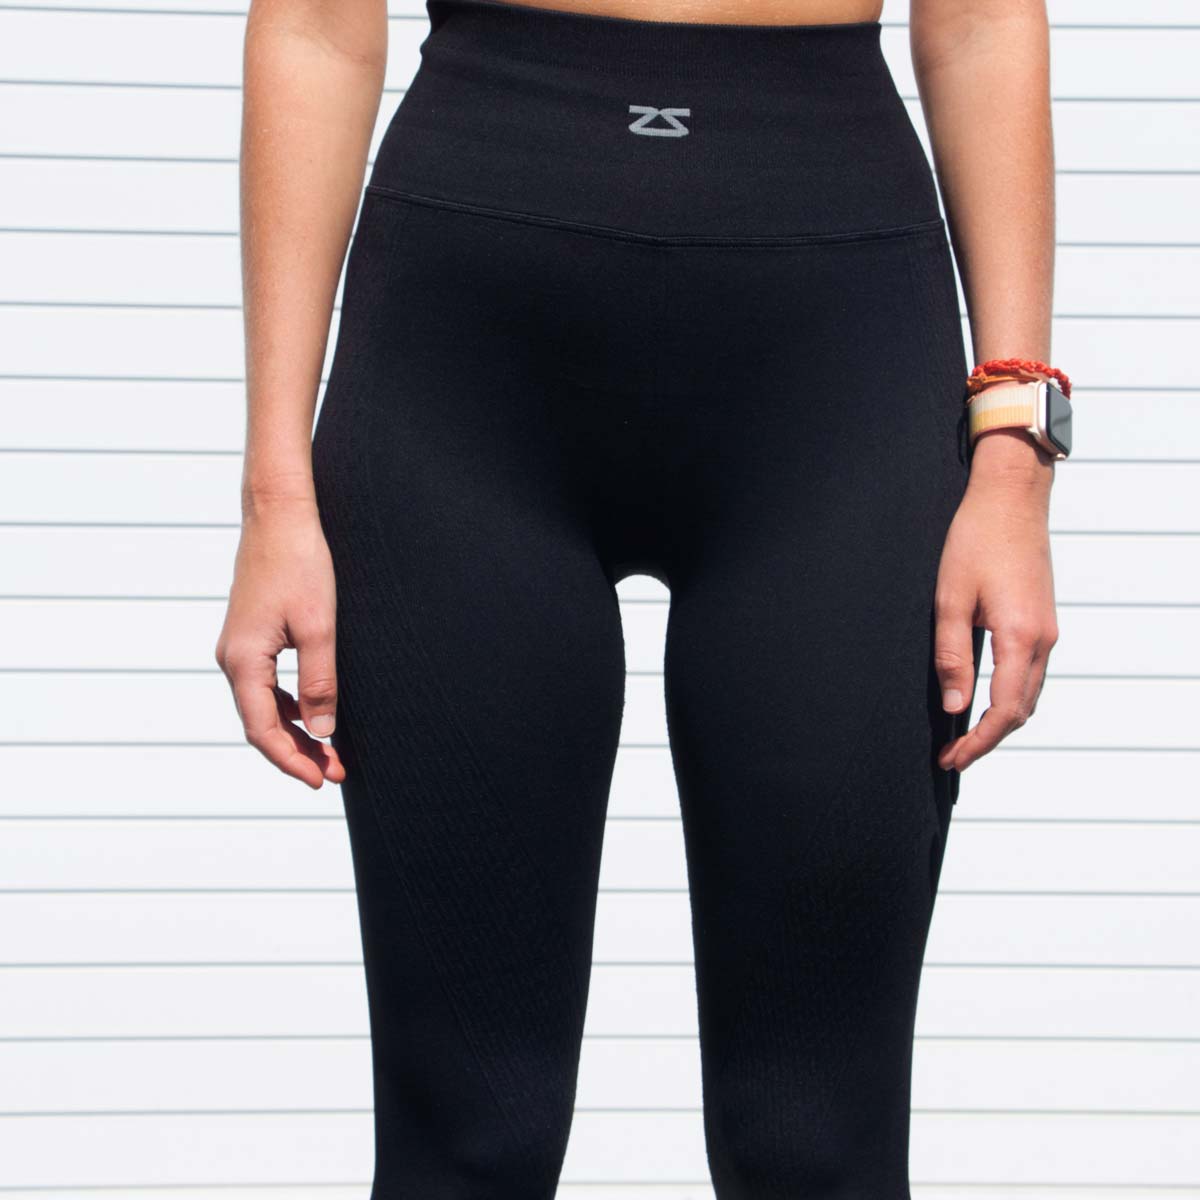  Seamless Scrunch Legging Women Yoga Pants 7/8 Tummy Control  Workout Running For Fitness Sport Active Legging-25M